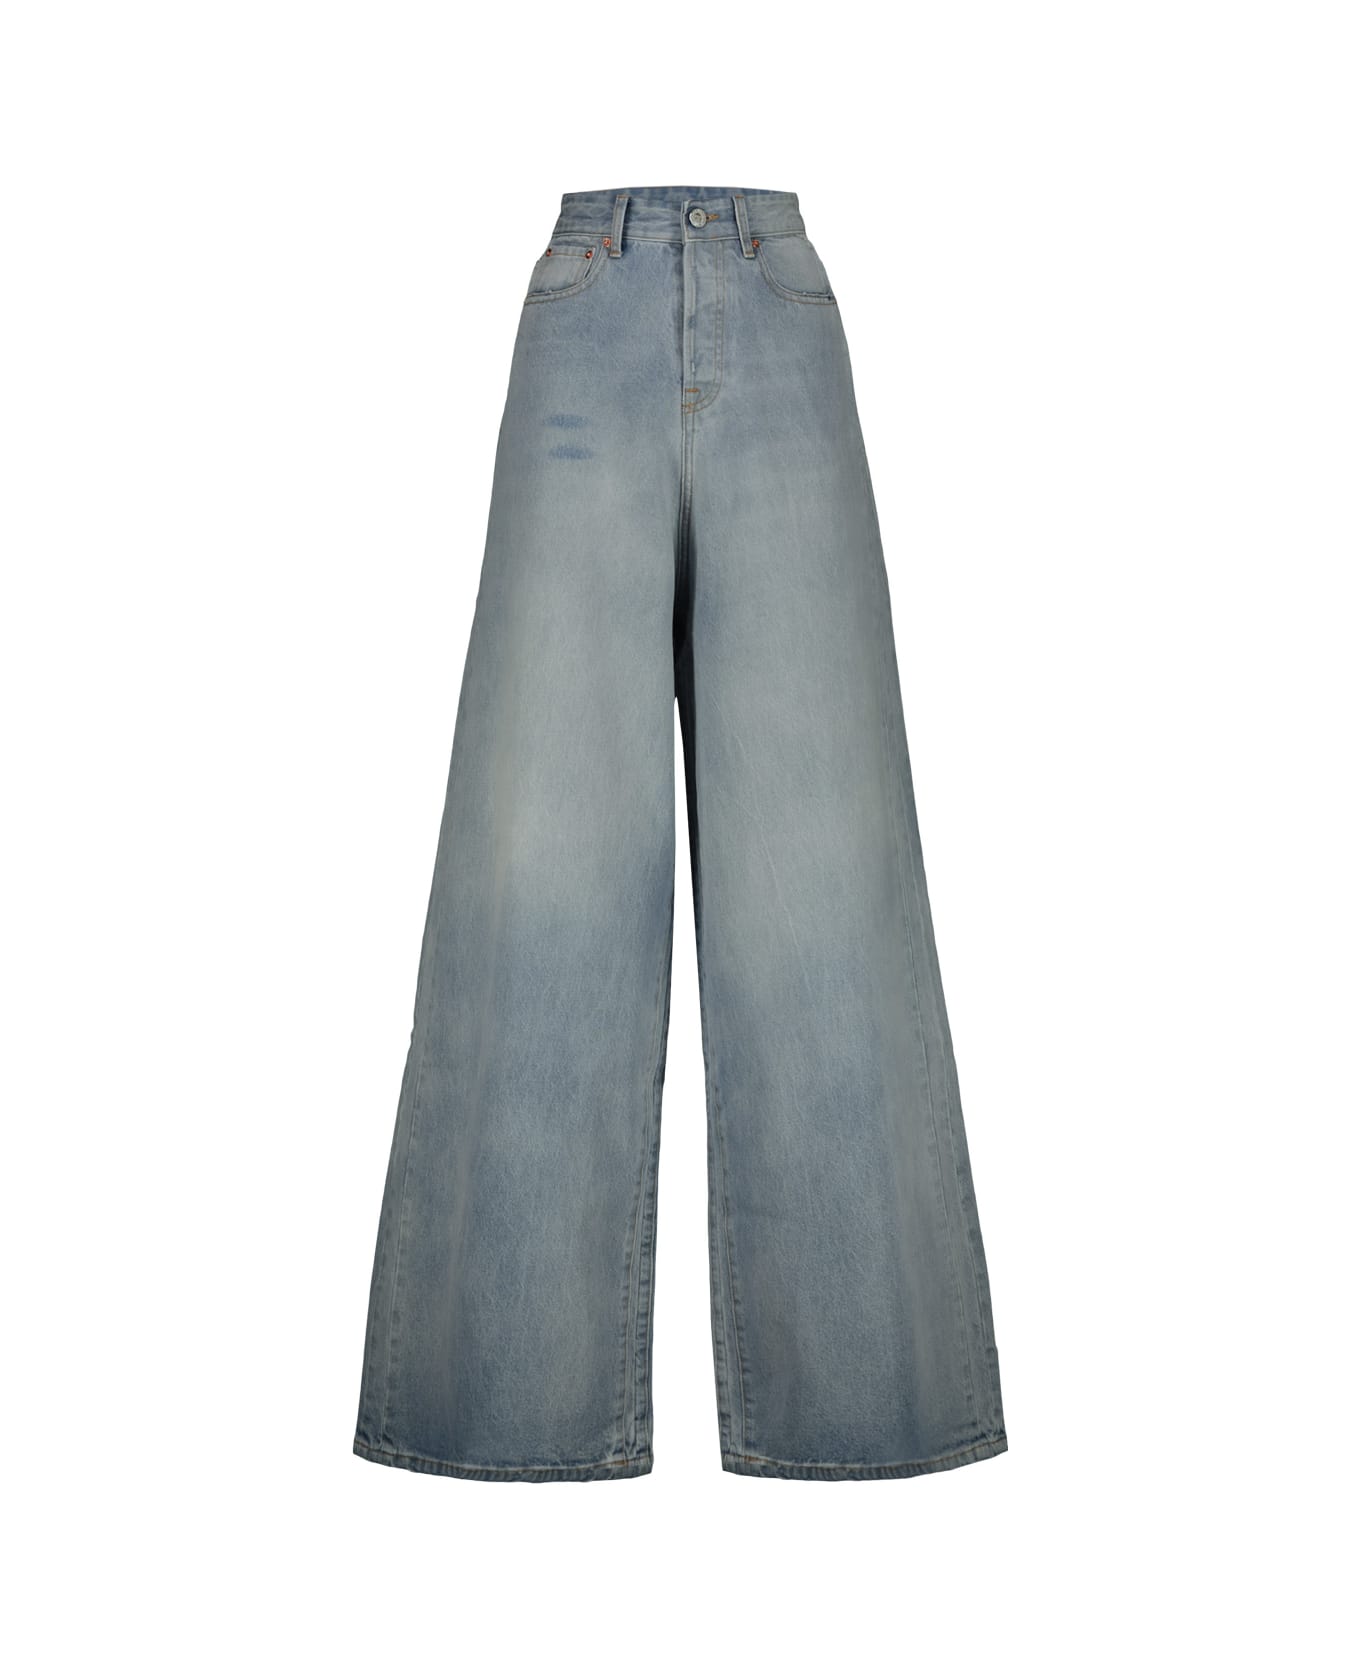 VETEMENTS Big Shape Jeans - NAVY デニム